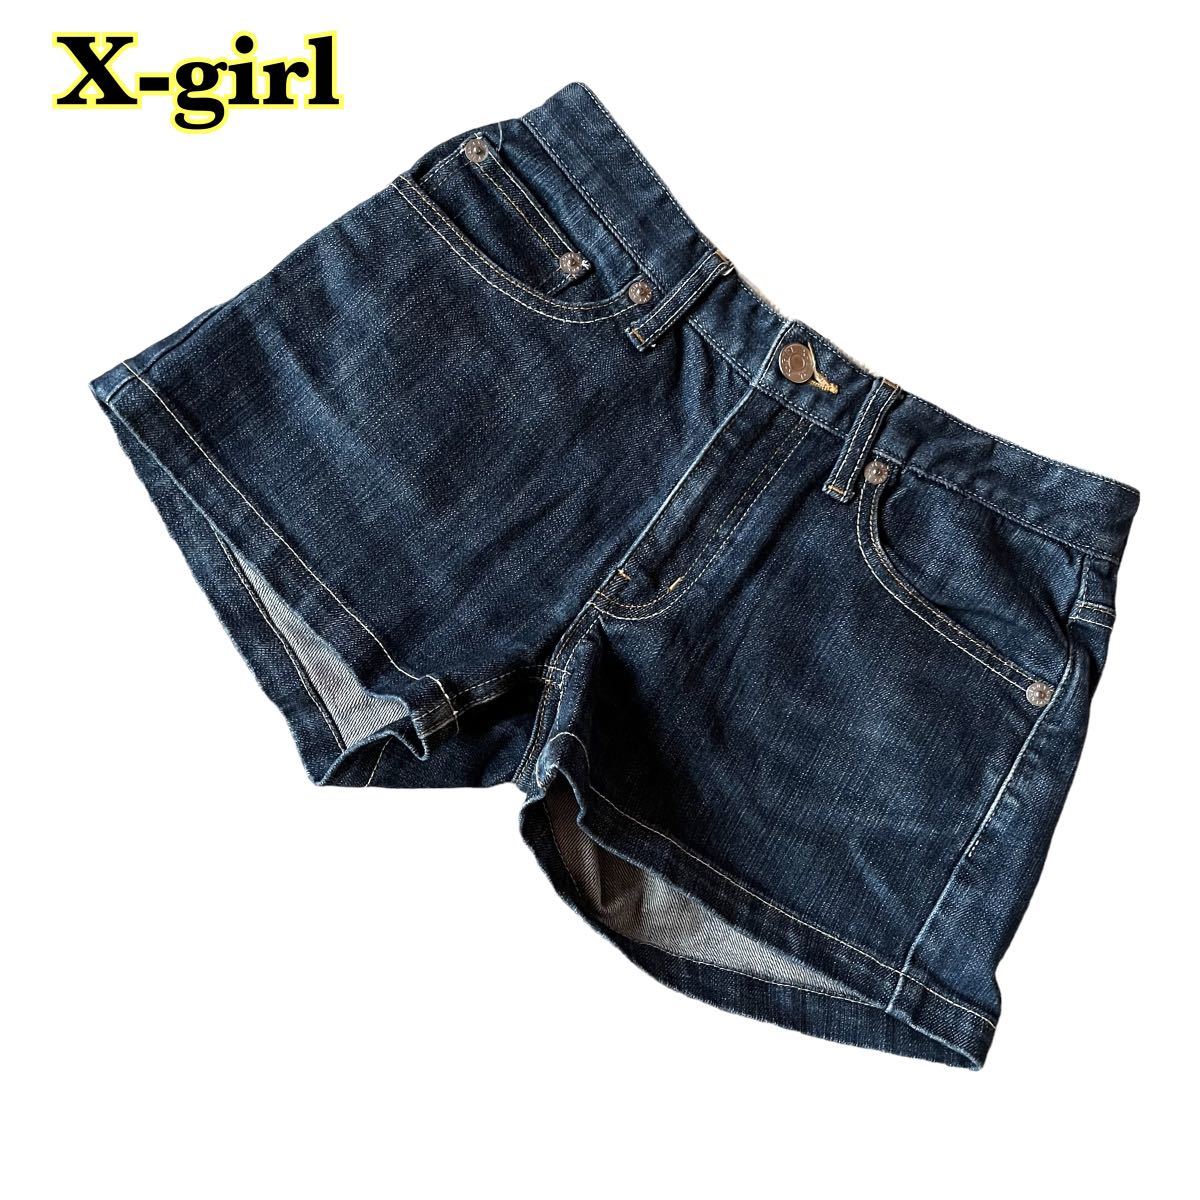 X-girl X-girl Denim short pants blue lady's 0 size [AY0996]